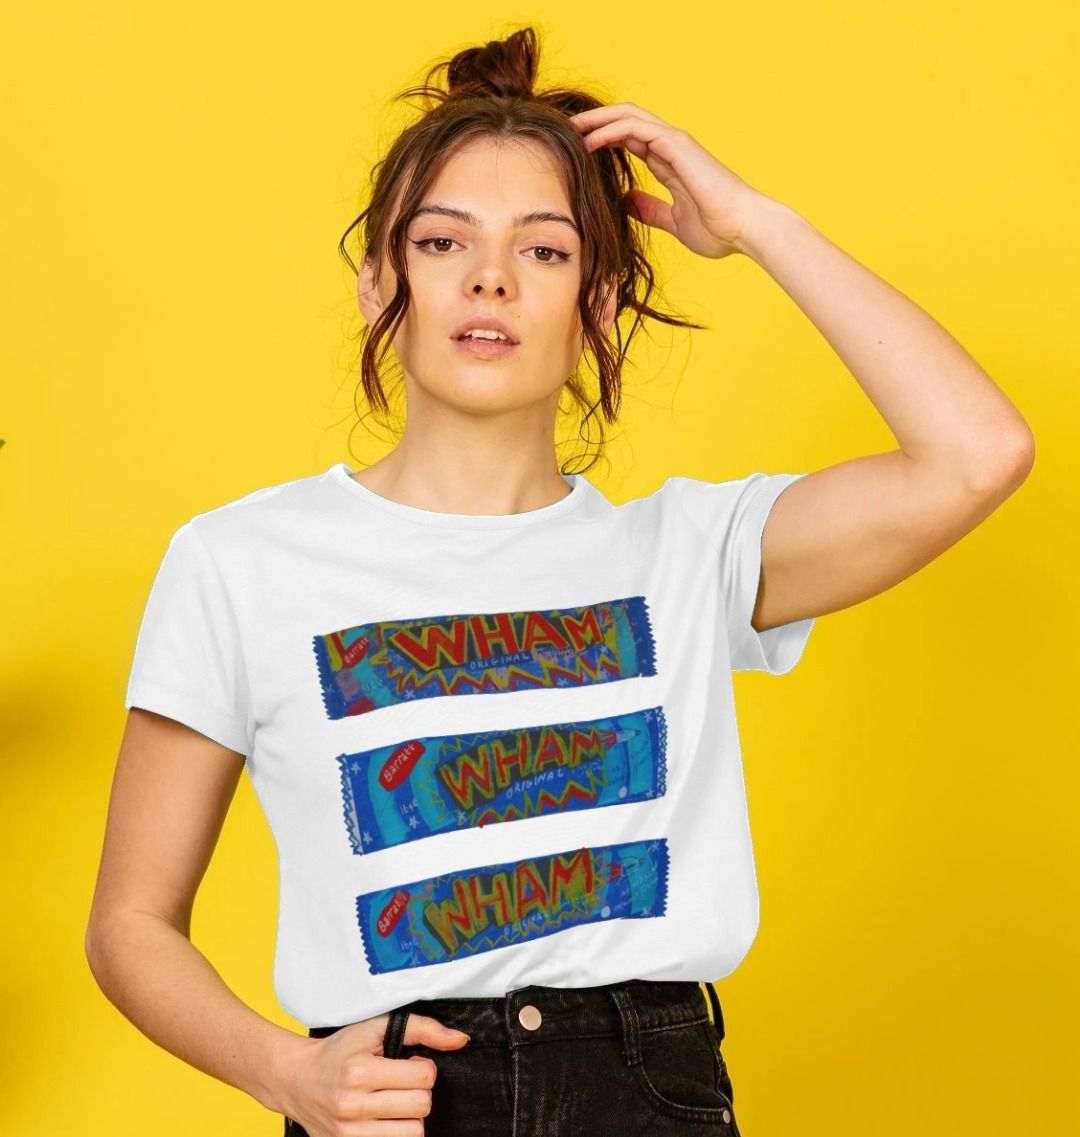 fizz, pop, bang! women's tee - Printed T-shirt - Sarah Millin